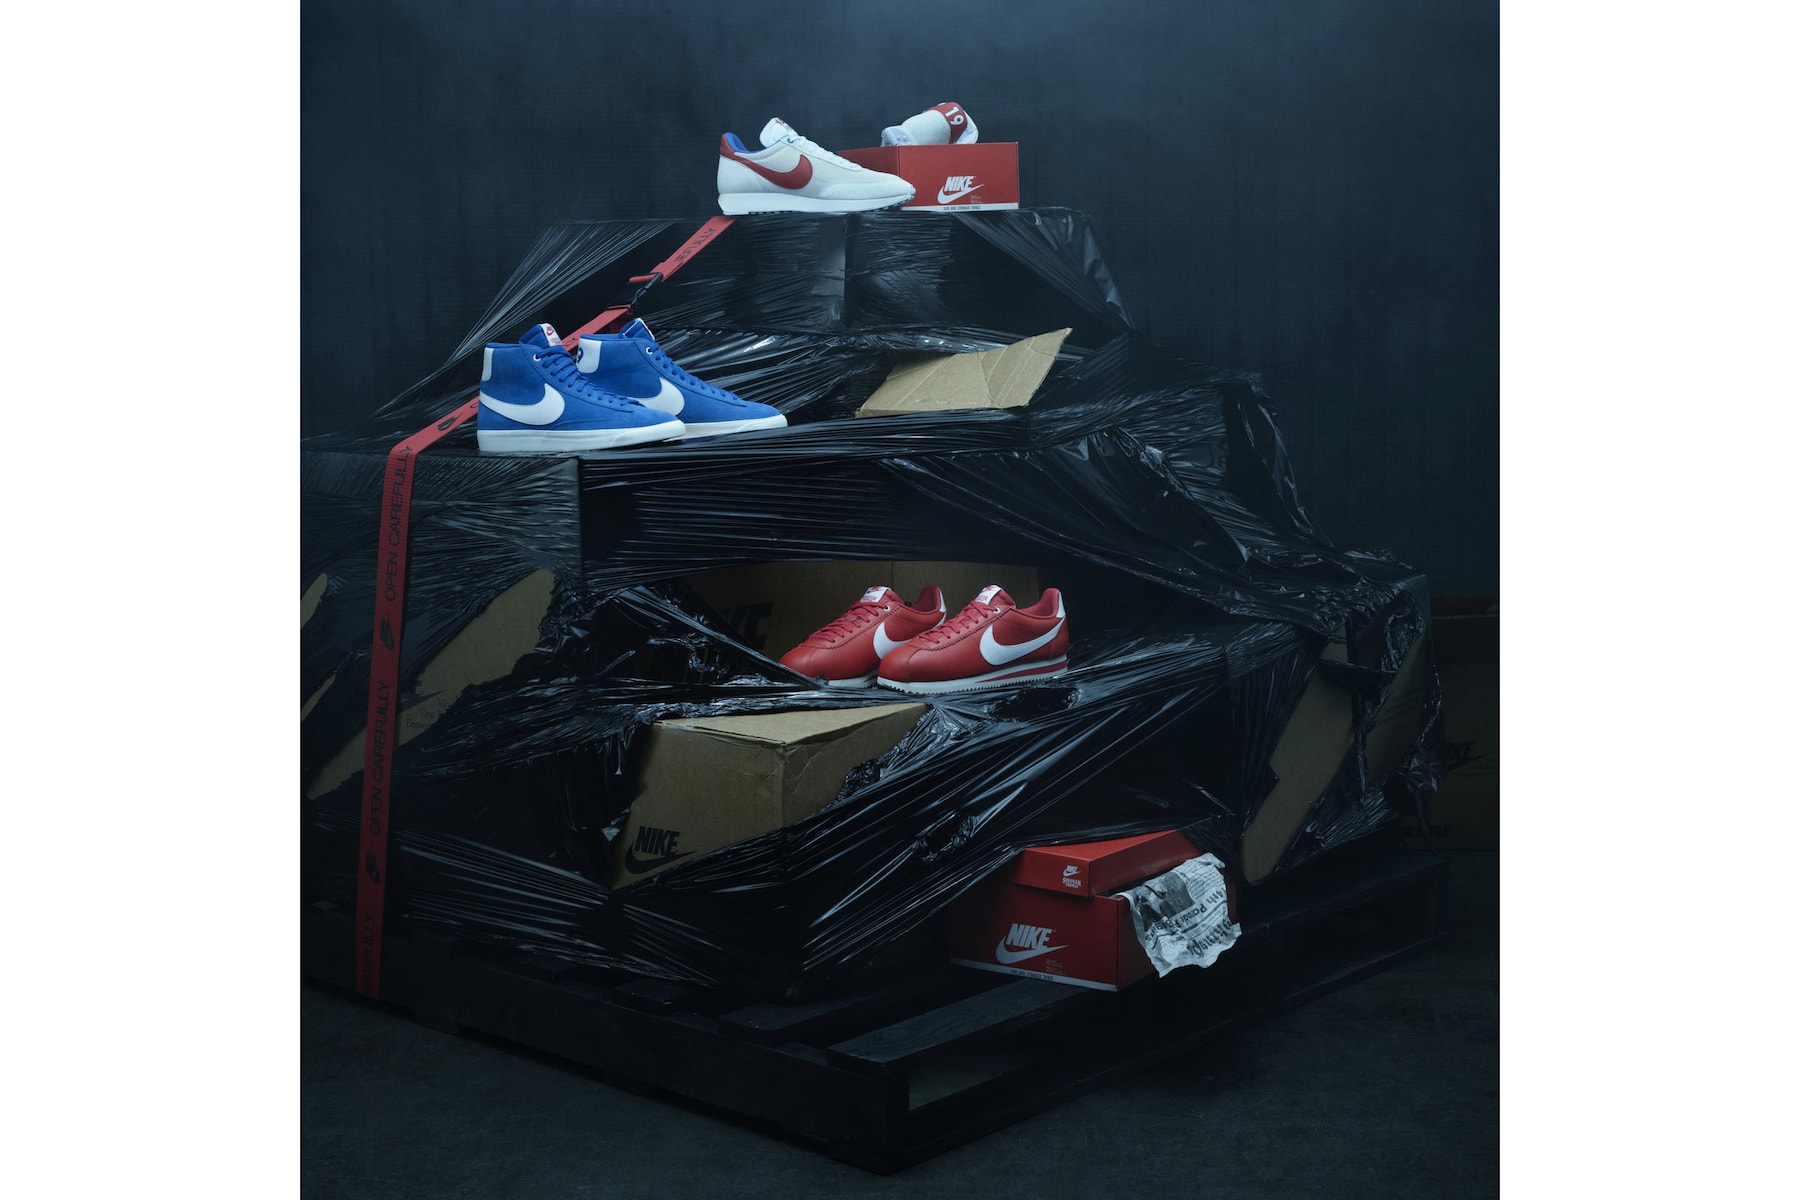 Stranger Things x Nike Collection Release Date Cortez Blazer Tailwind Capsule Drop Sneakers Trainers Netflix Footwear Apparel PE Uniform Retro Sporty 